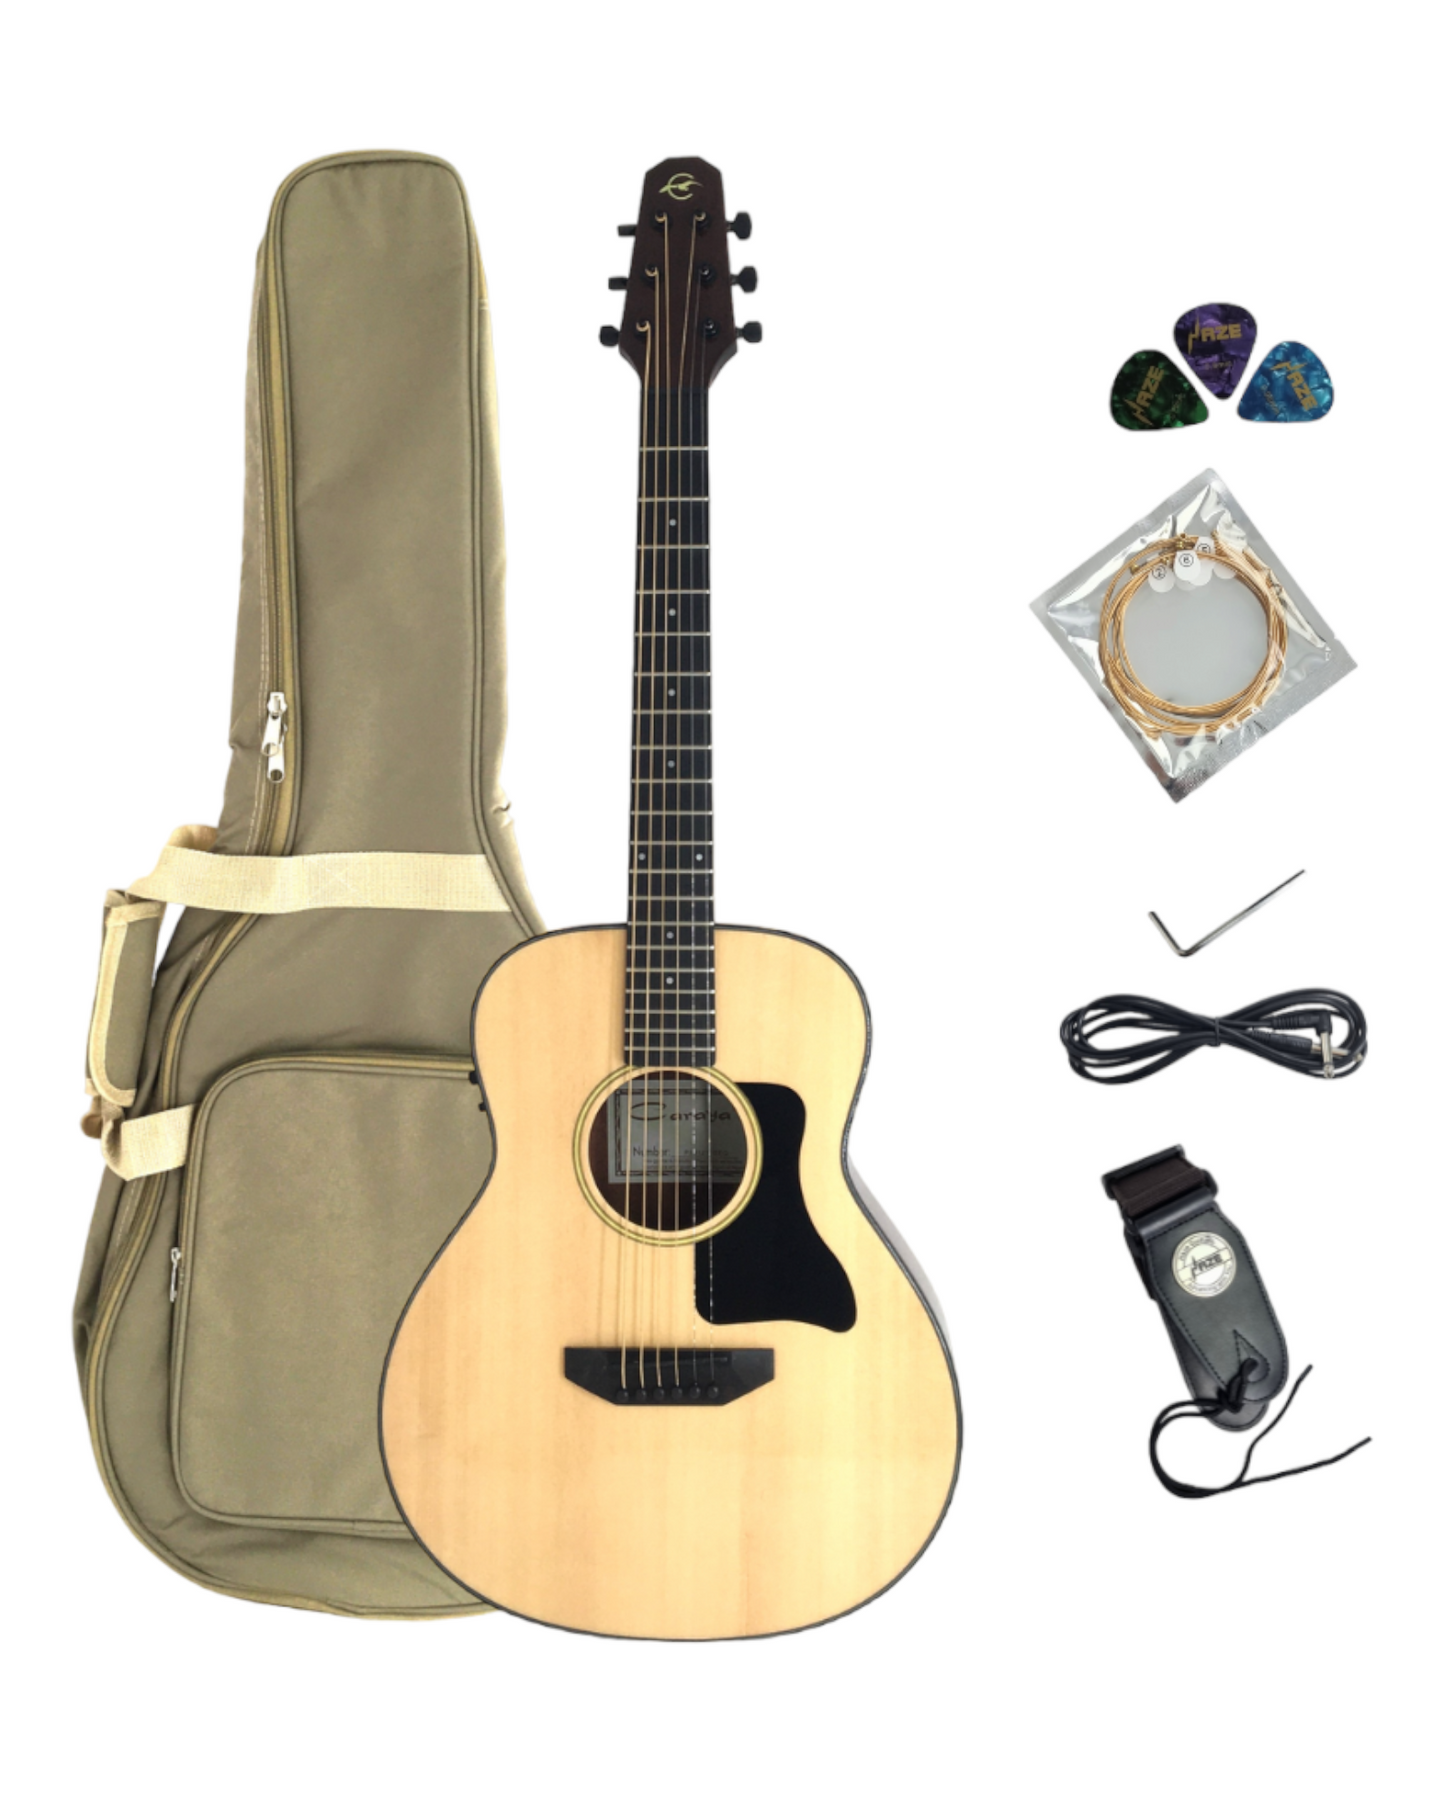 Caraya 3/4 Traveller Solid Spruce Built-In Pickups/Tuner Acoustic Guitar - Natural P301210SEQSP